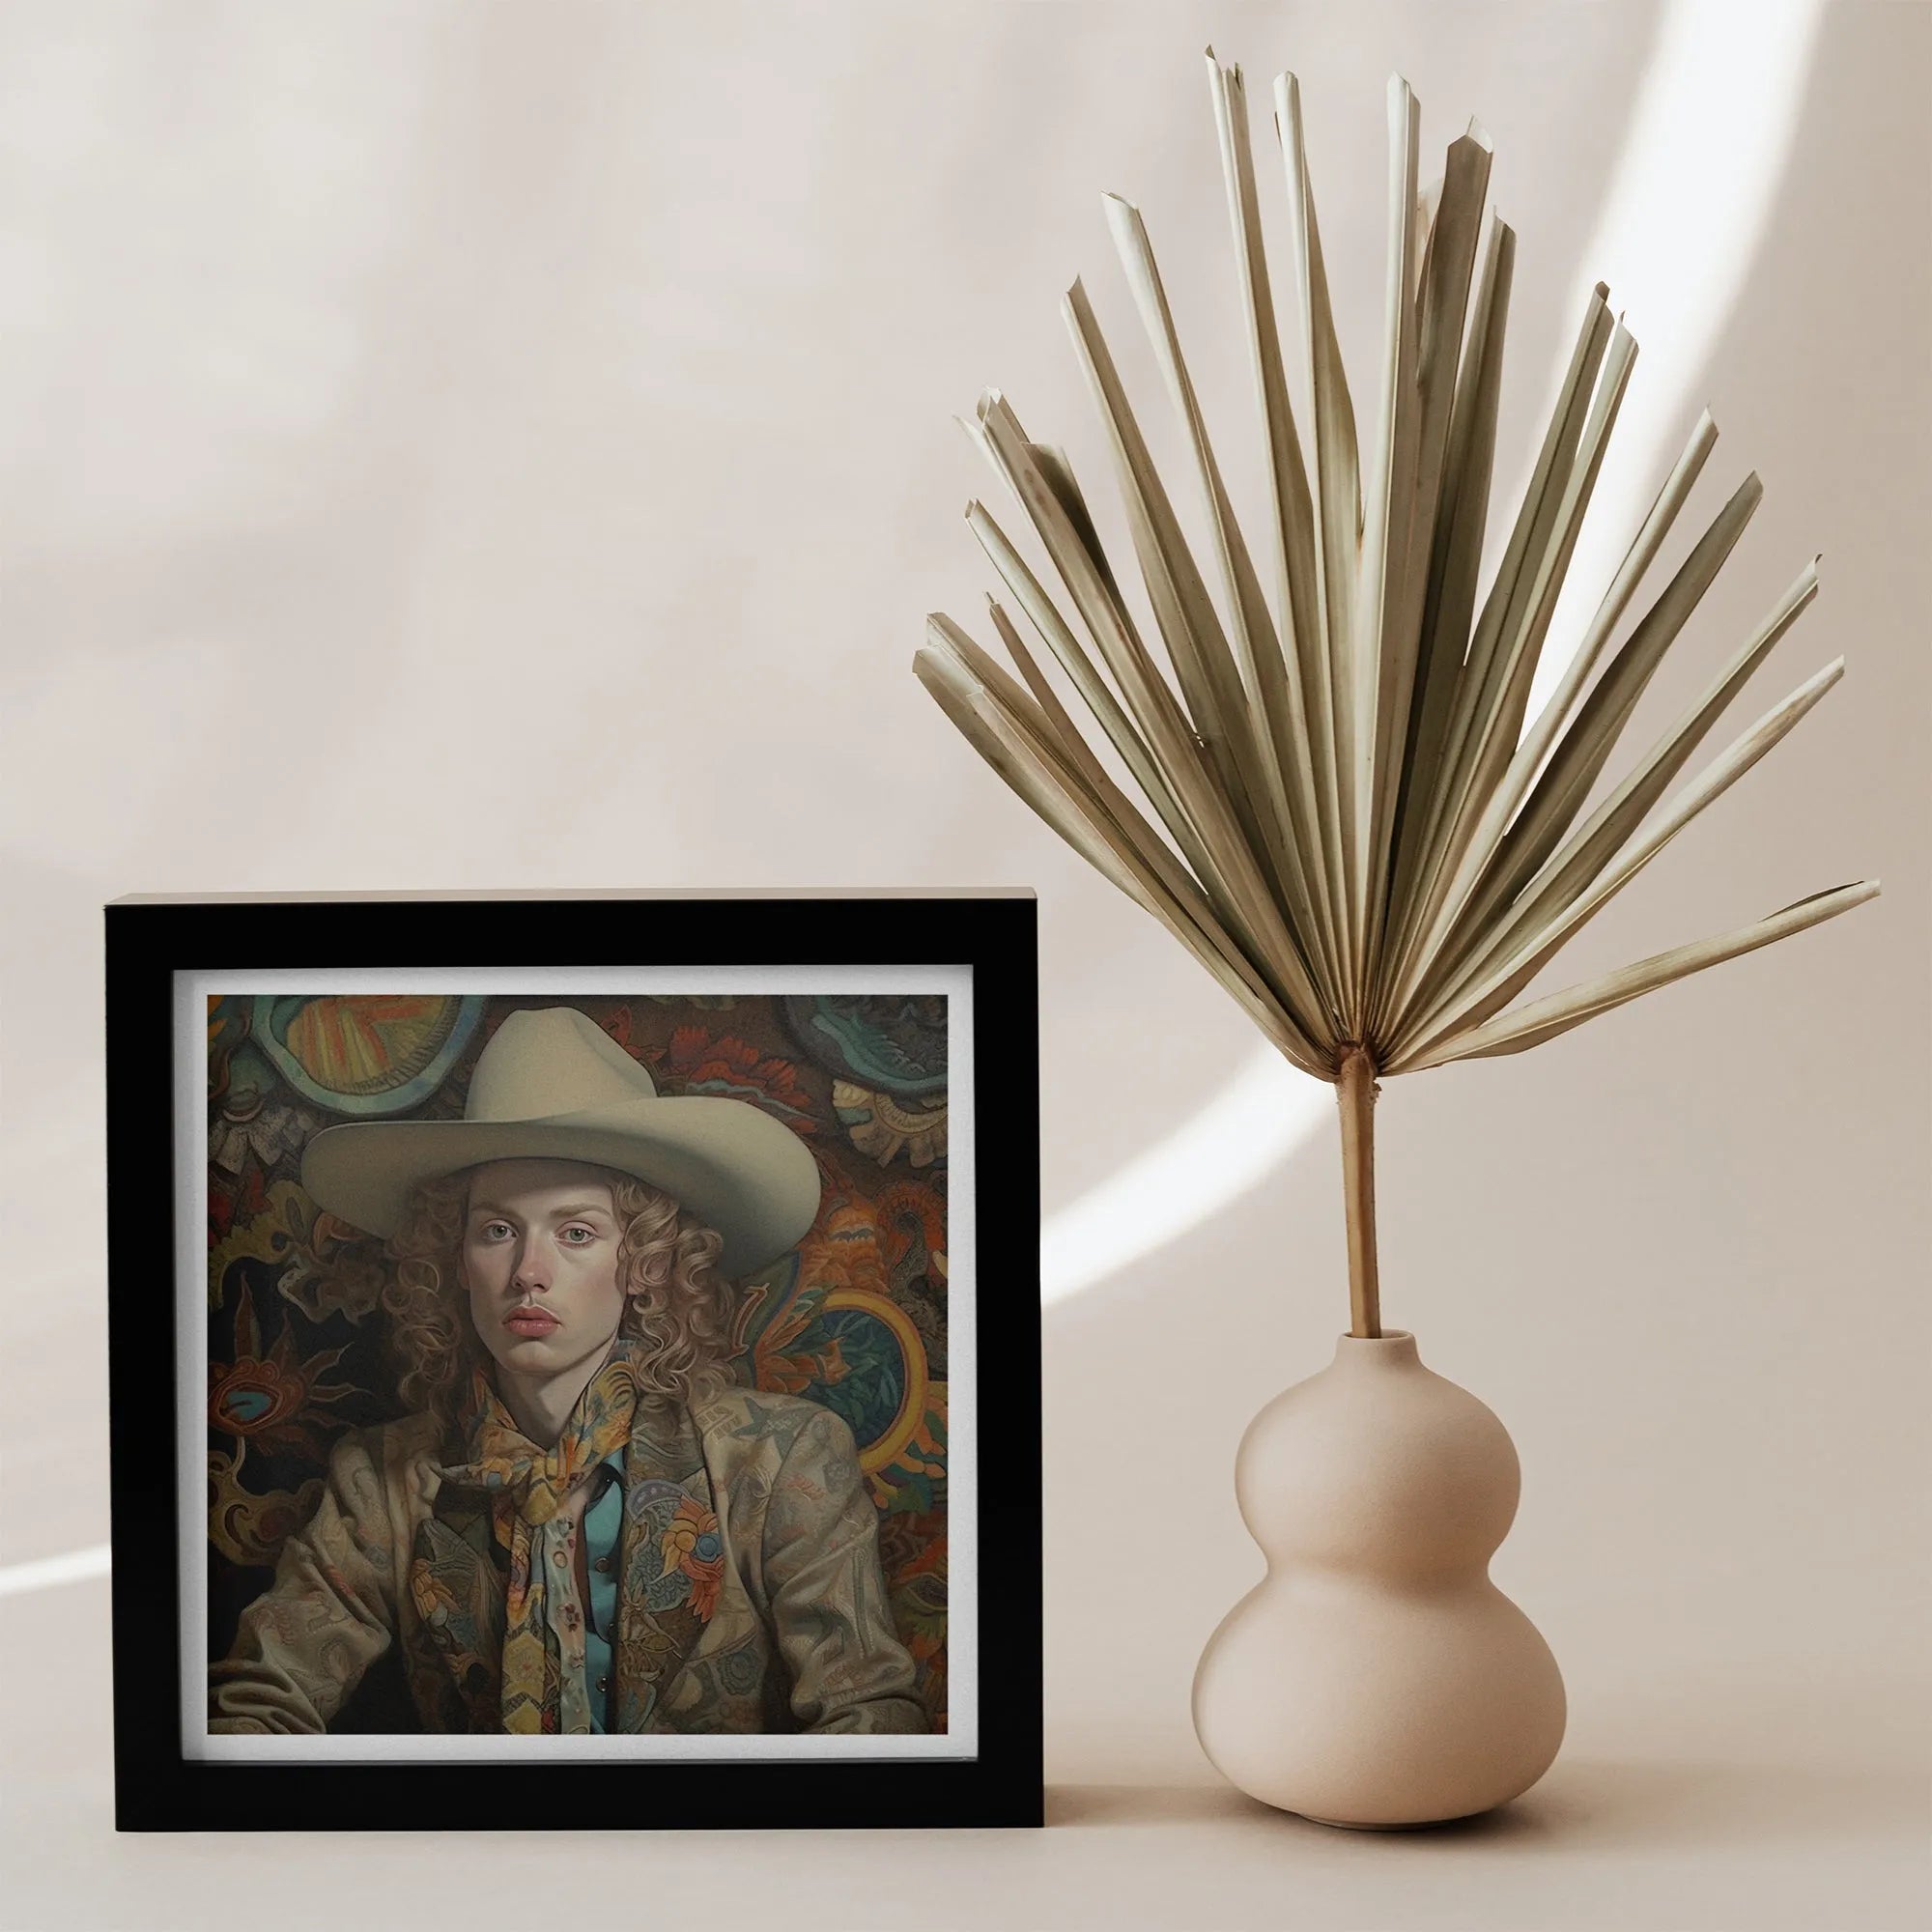 Ollie The Transgender Cowboy - F2m Dandy Transman Art Print - 12’x12’ - Posters Prints & Visual Artwork - Aesthetic Art